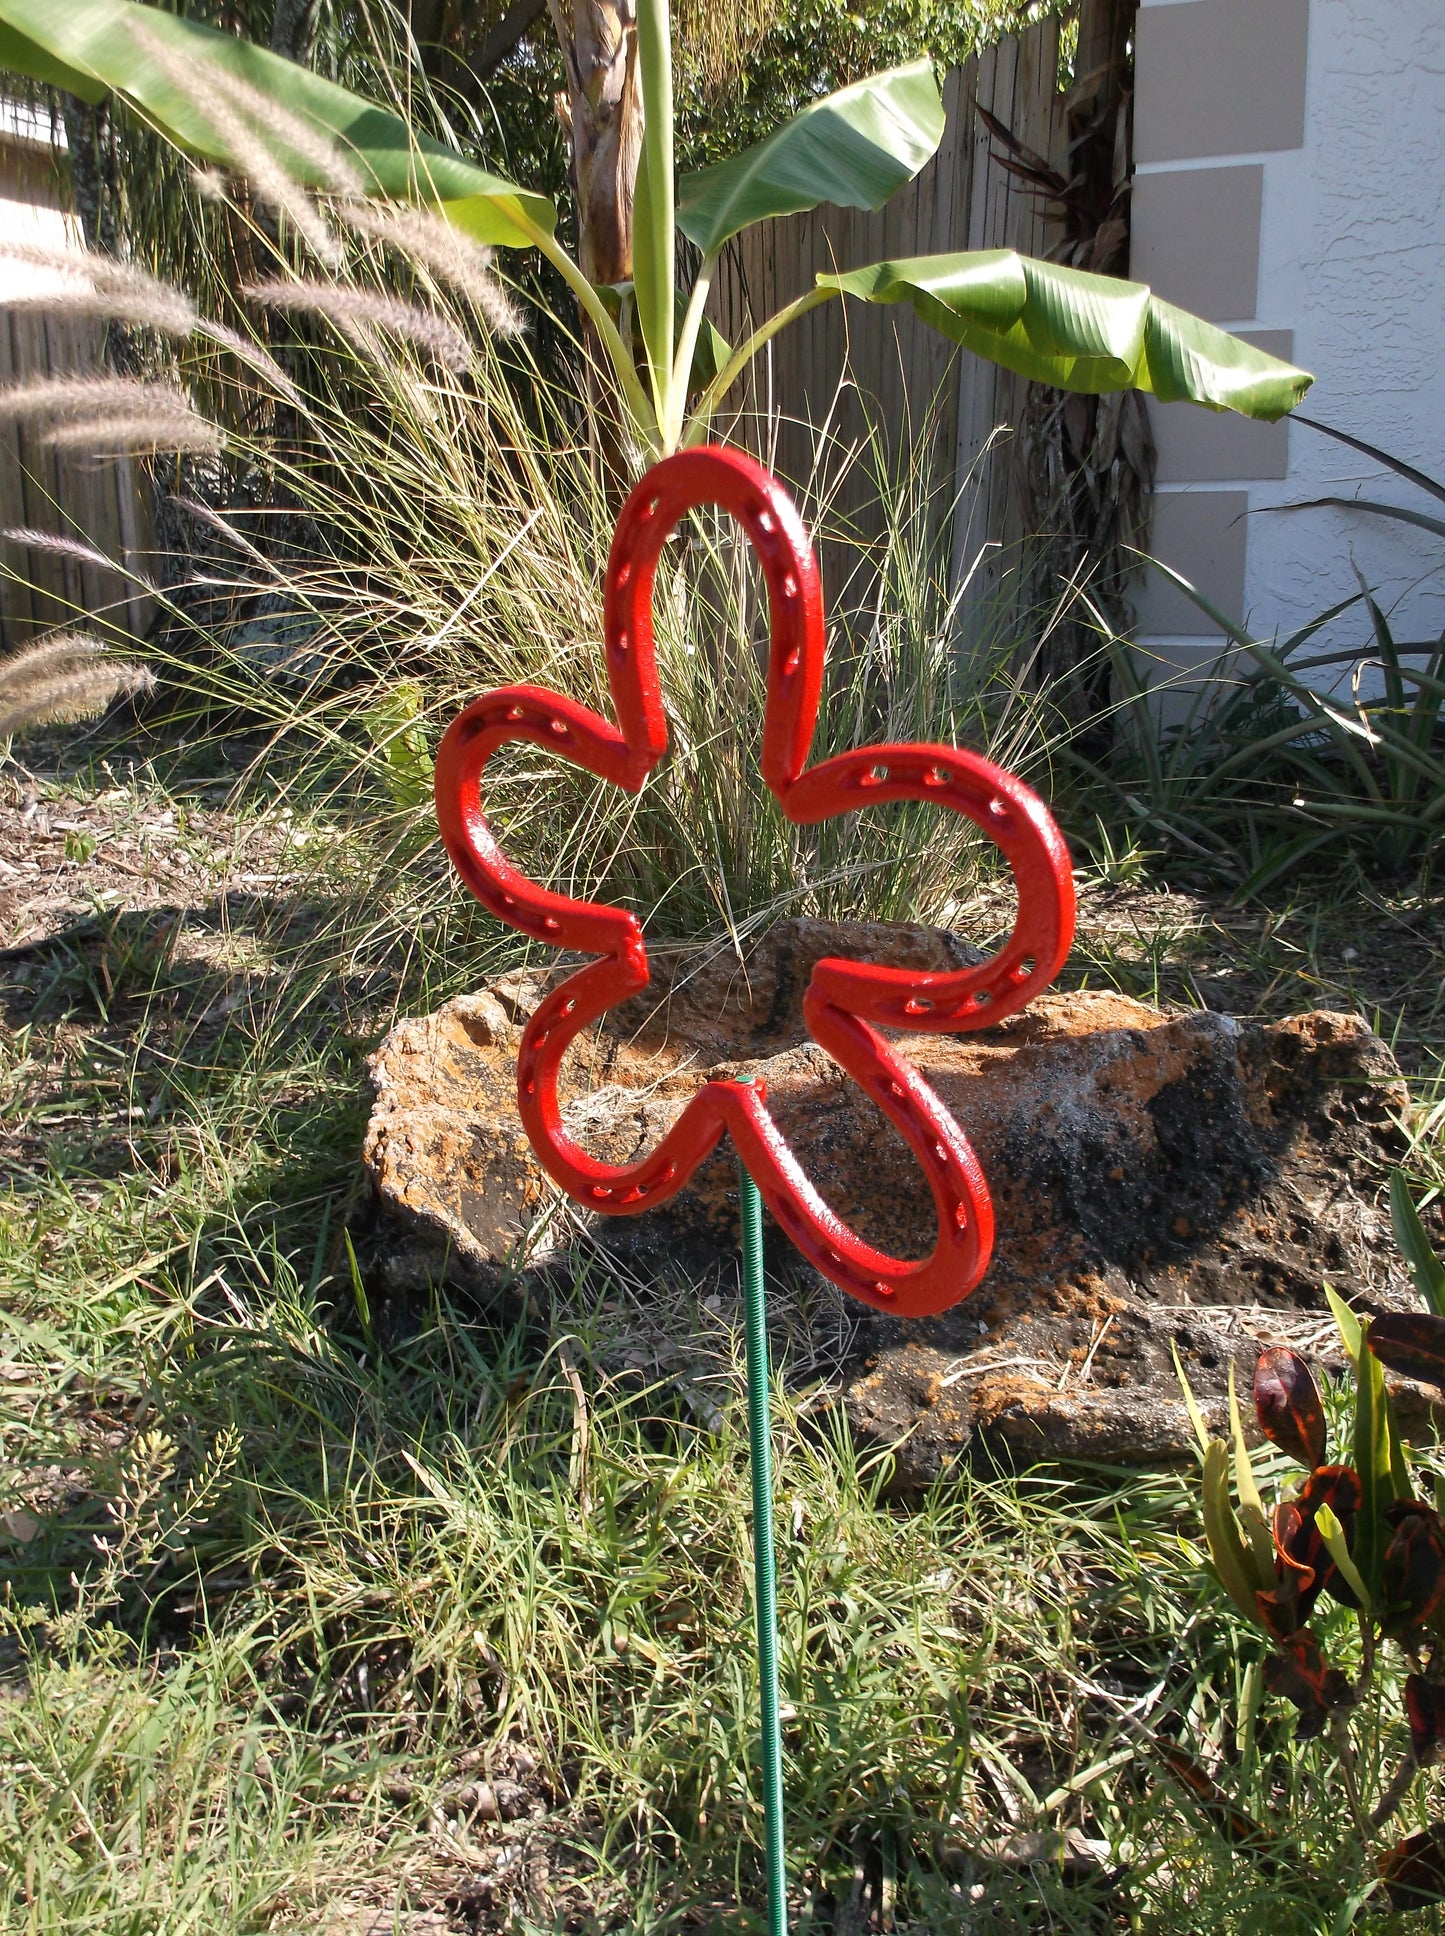 Red Horseshoe Flower, Metal Garden Stake, Spring Yard Art, Lucky Horseshoe